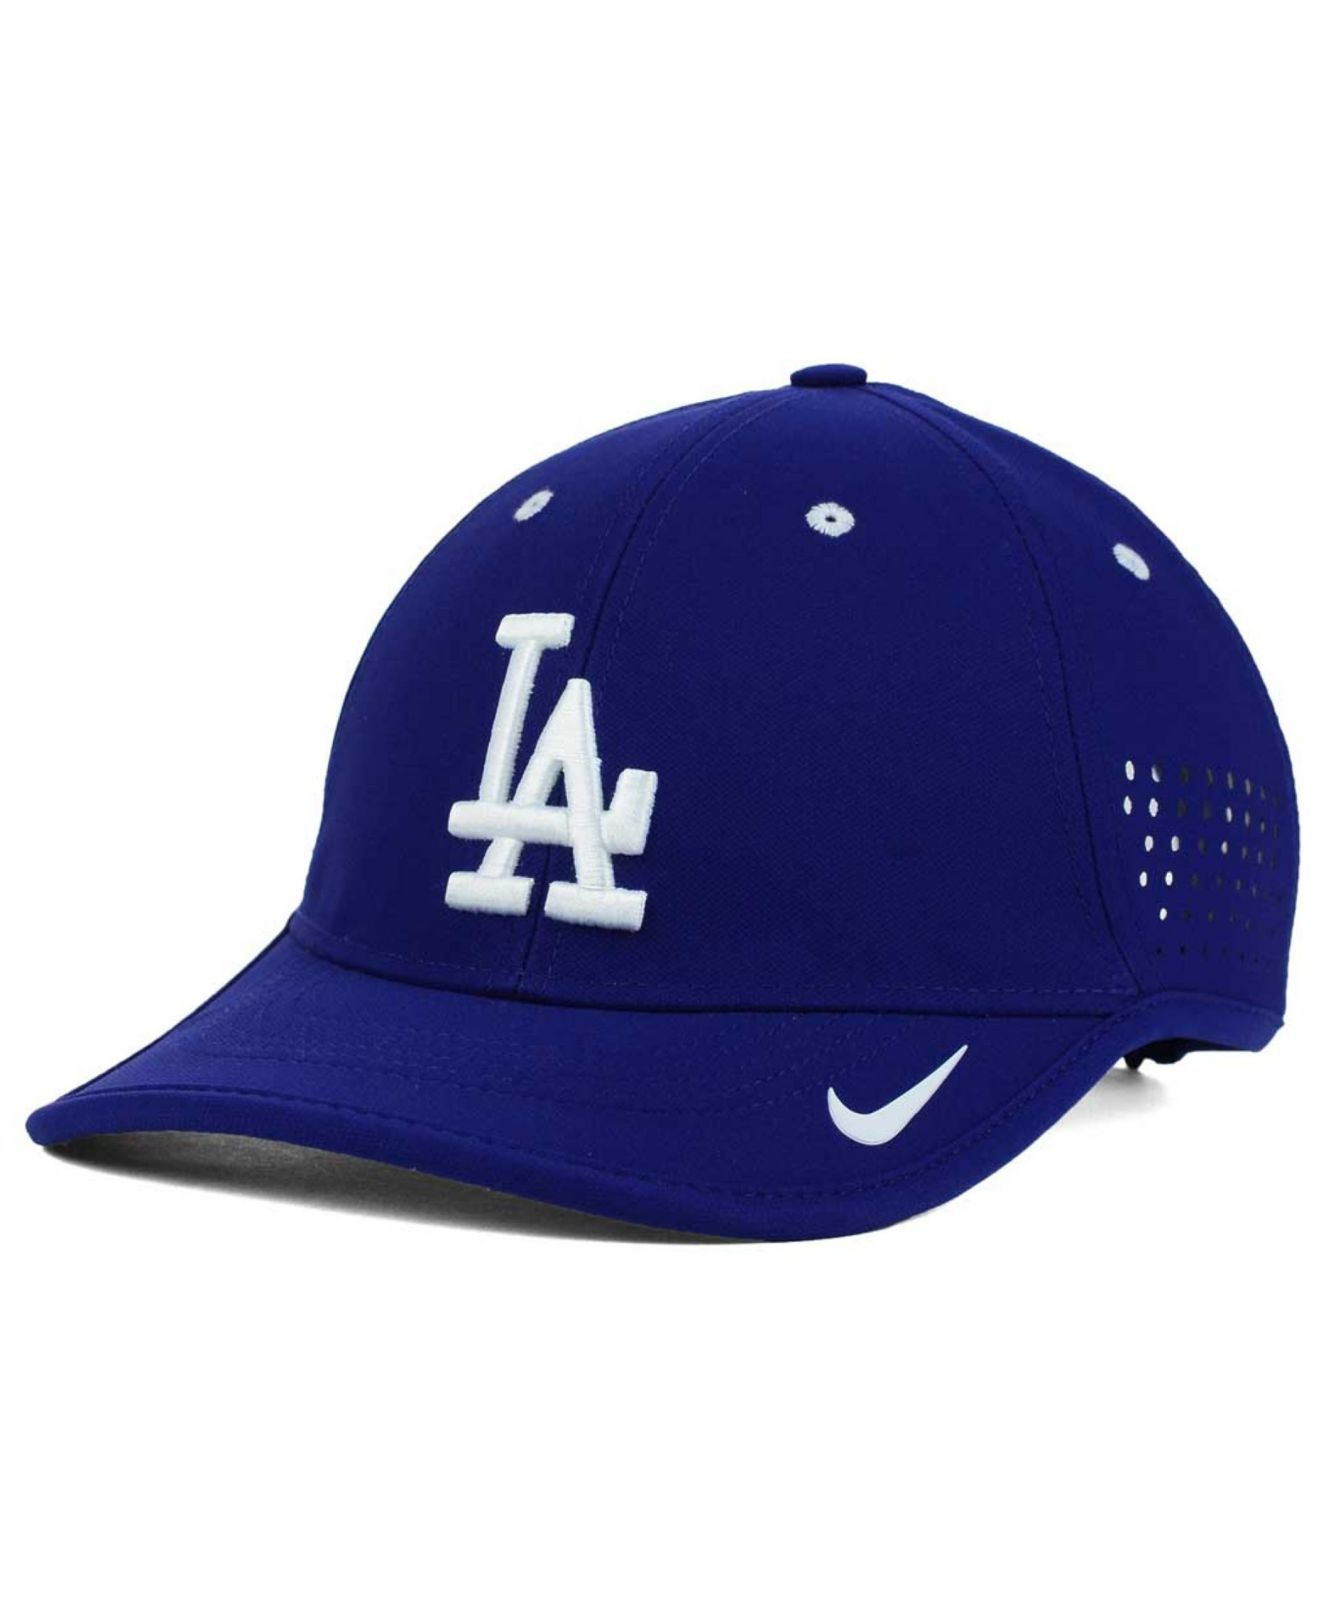 Nike Los Angeles Dodgers Vapor Swoosh Adjustable Cap in Blue for Men - Lyst